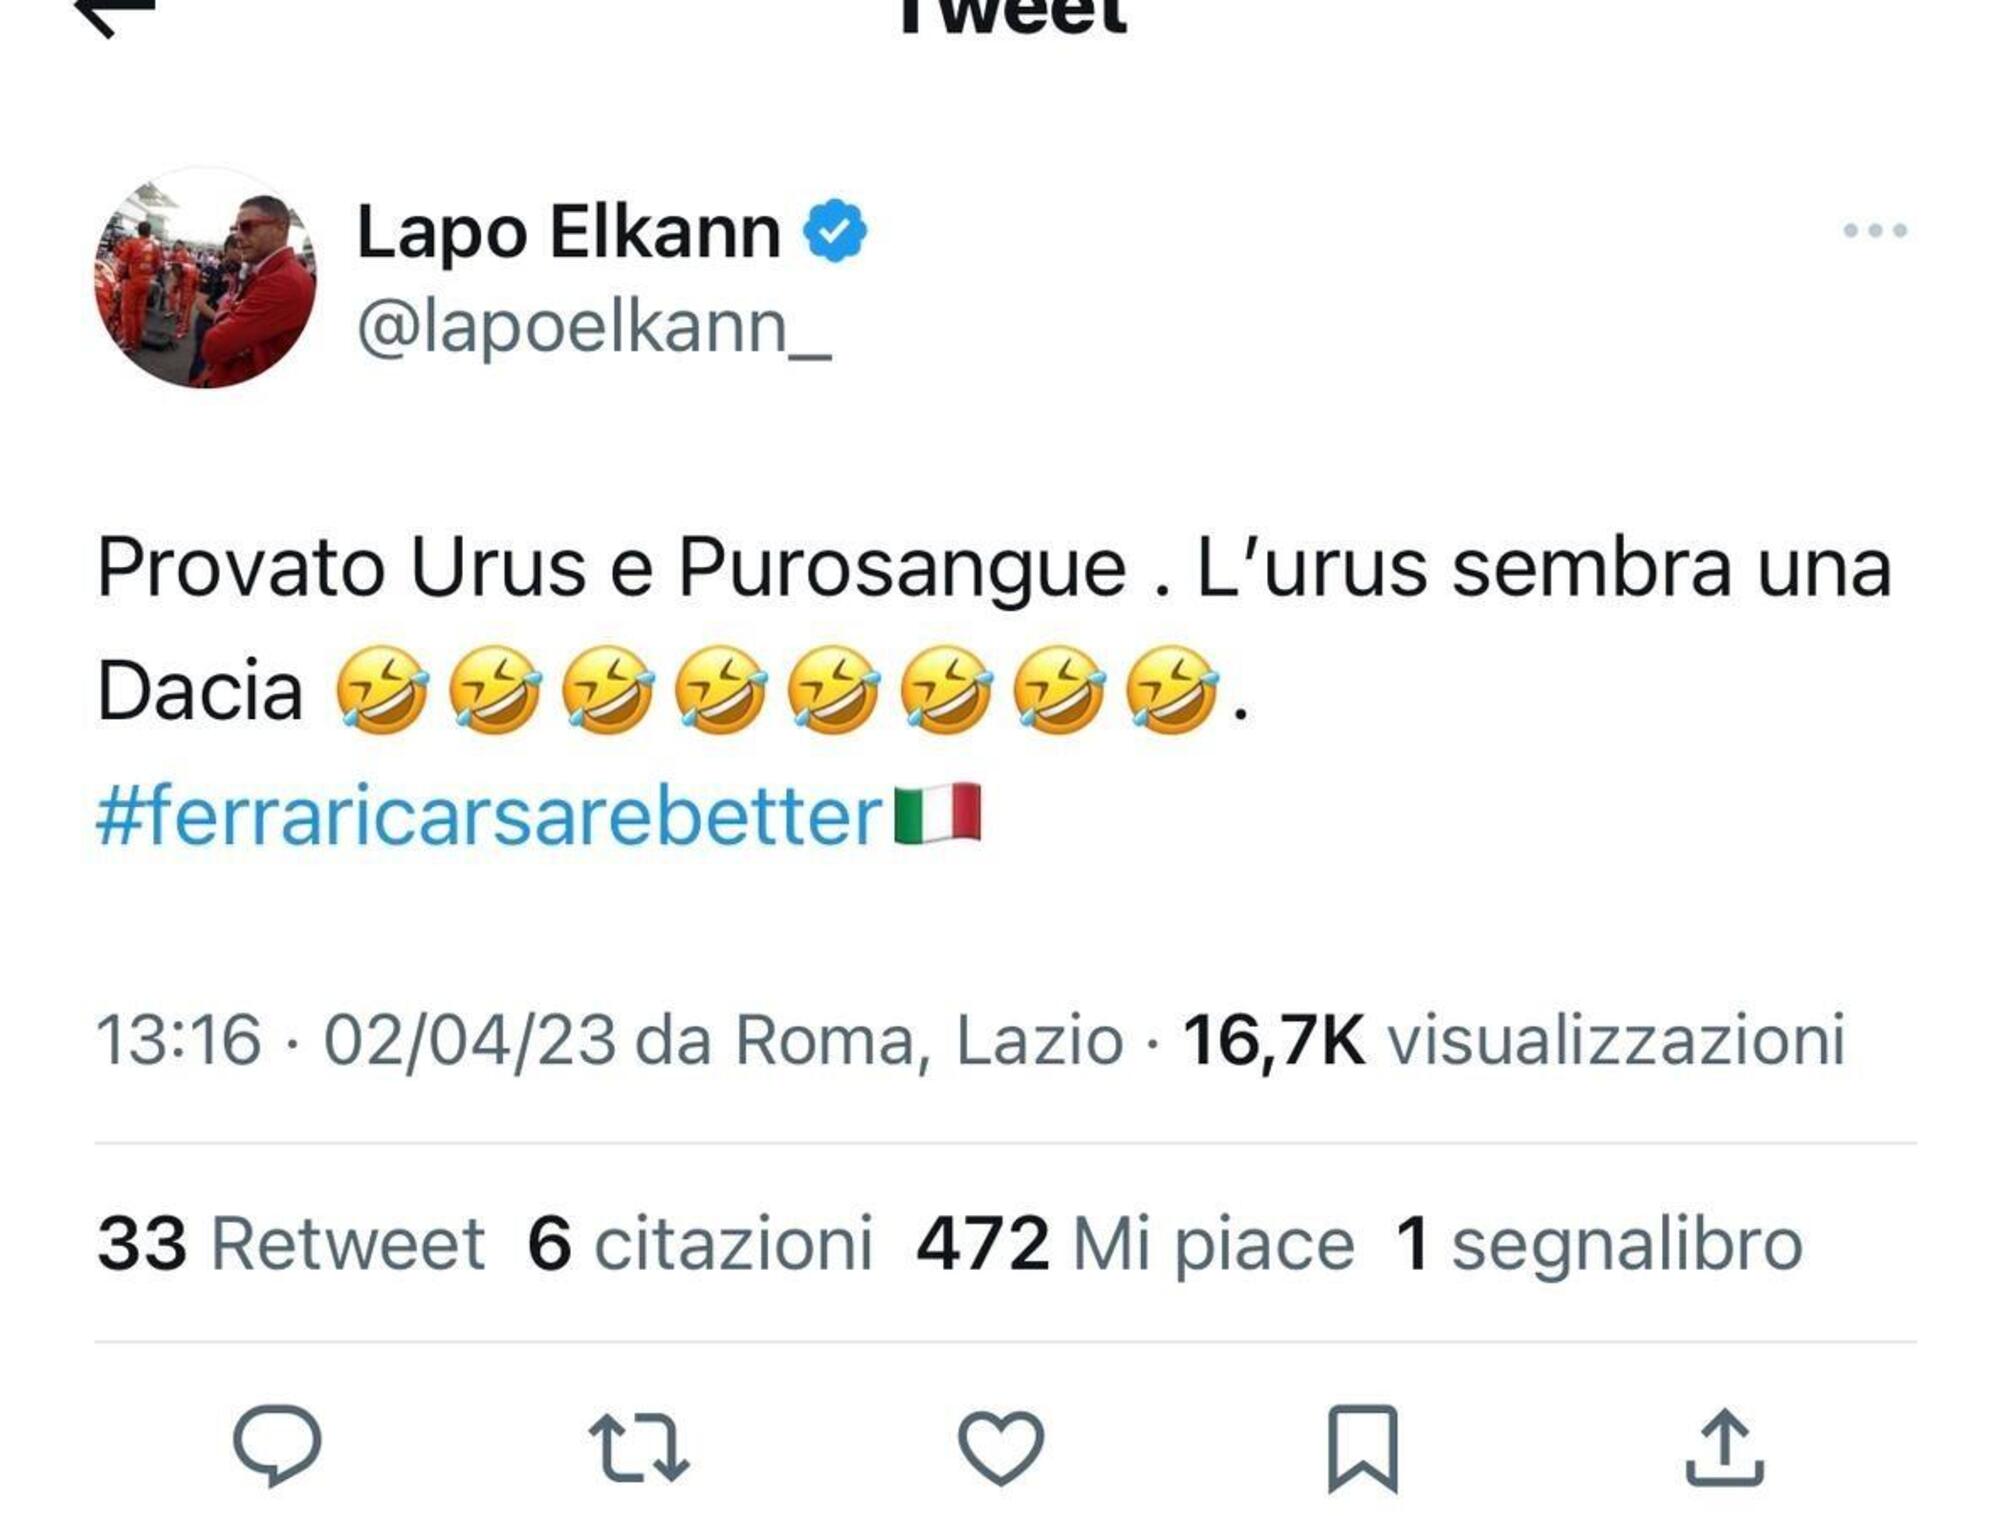 Lapo Elkann tweet